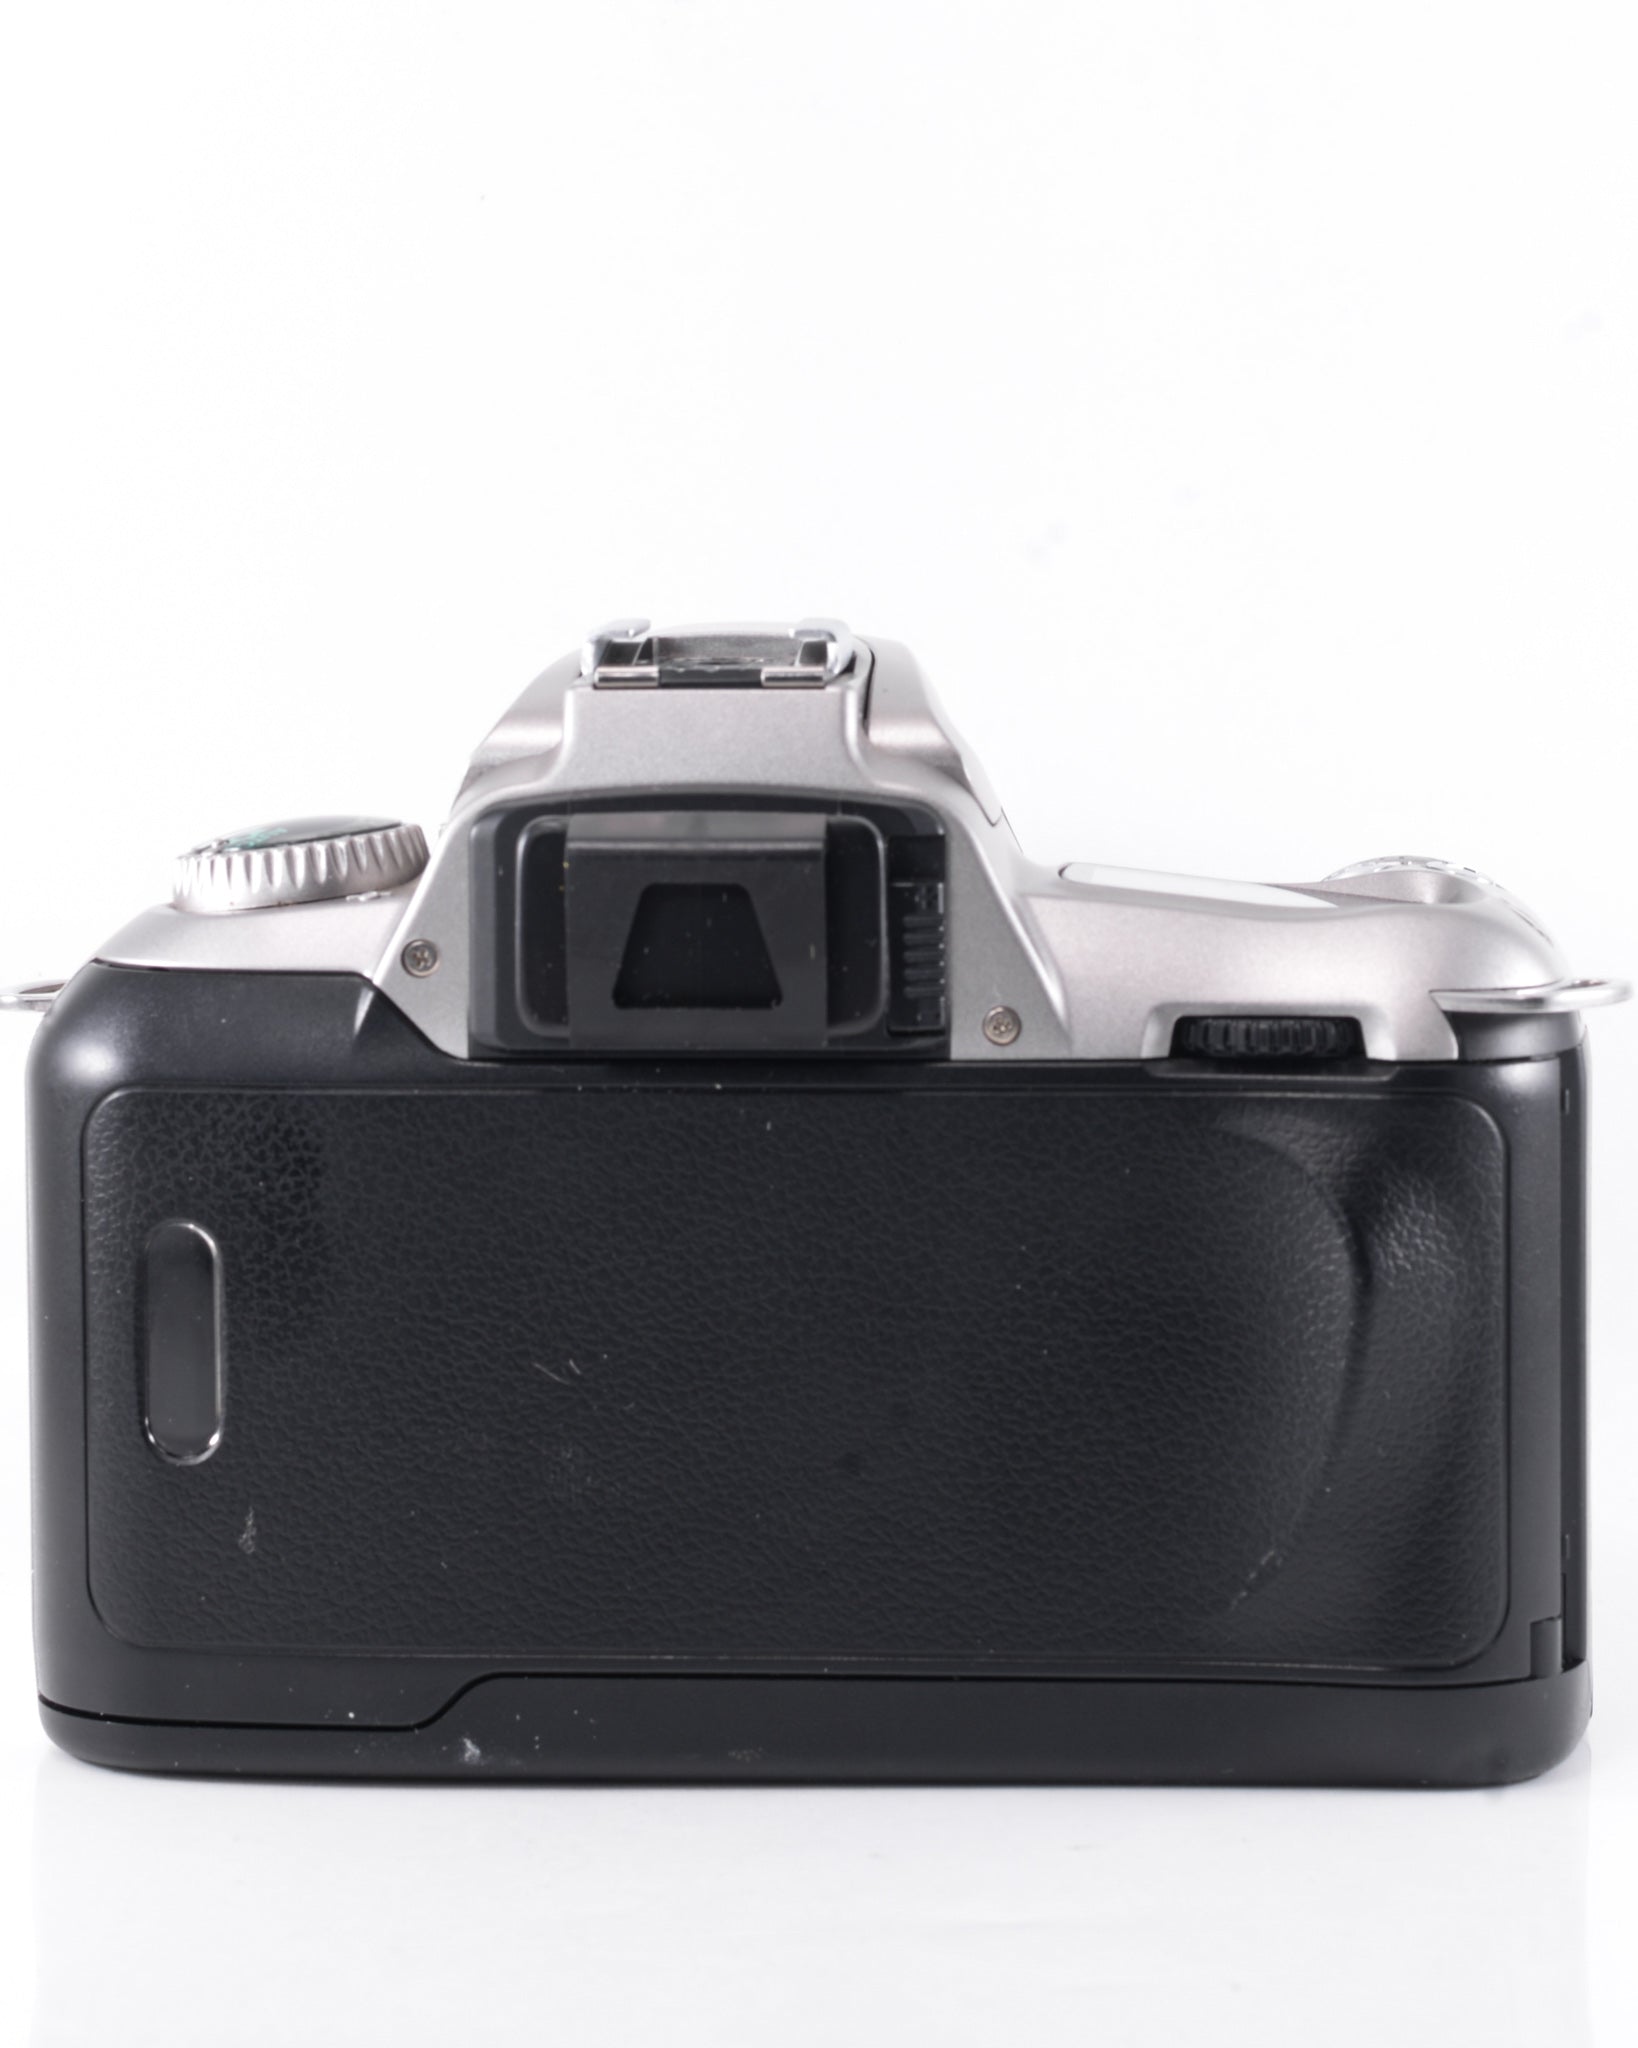 BOXED Nikon F55 35mm SLR film camera with 28-80mm lens